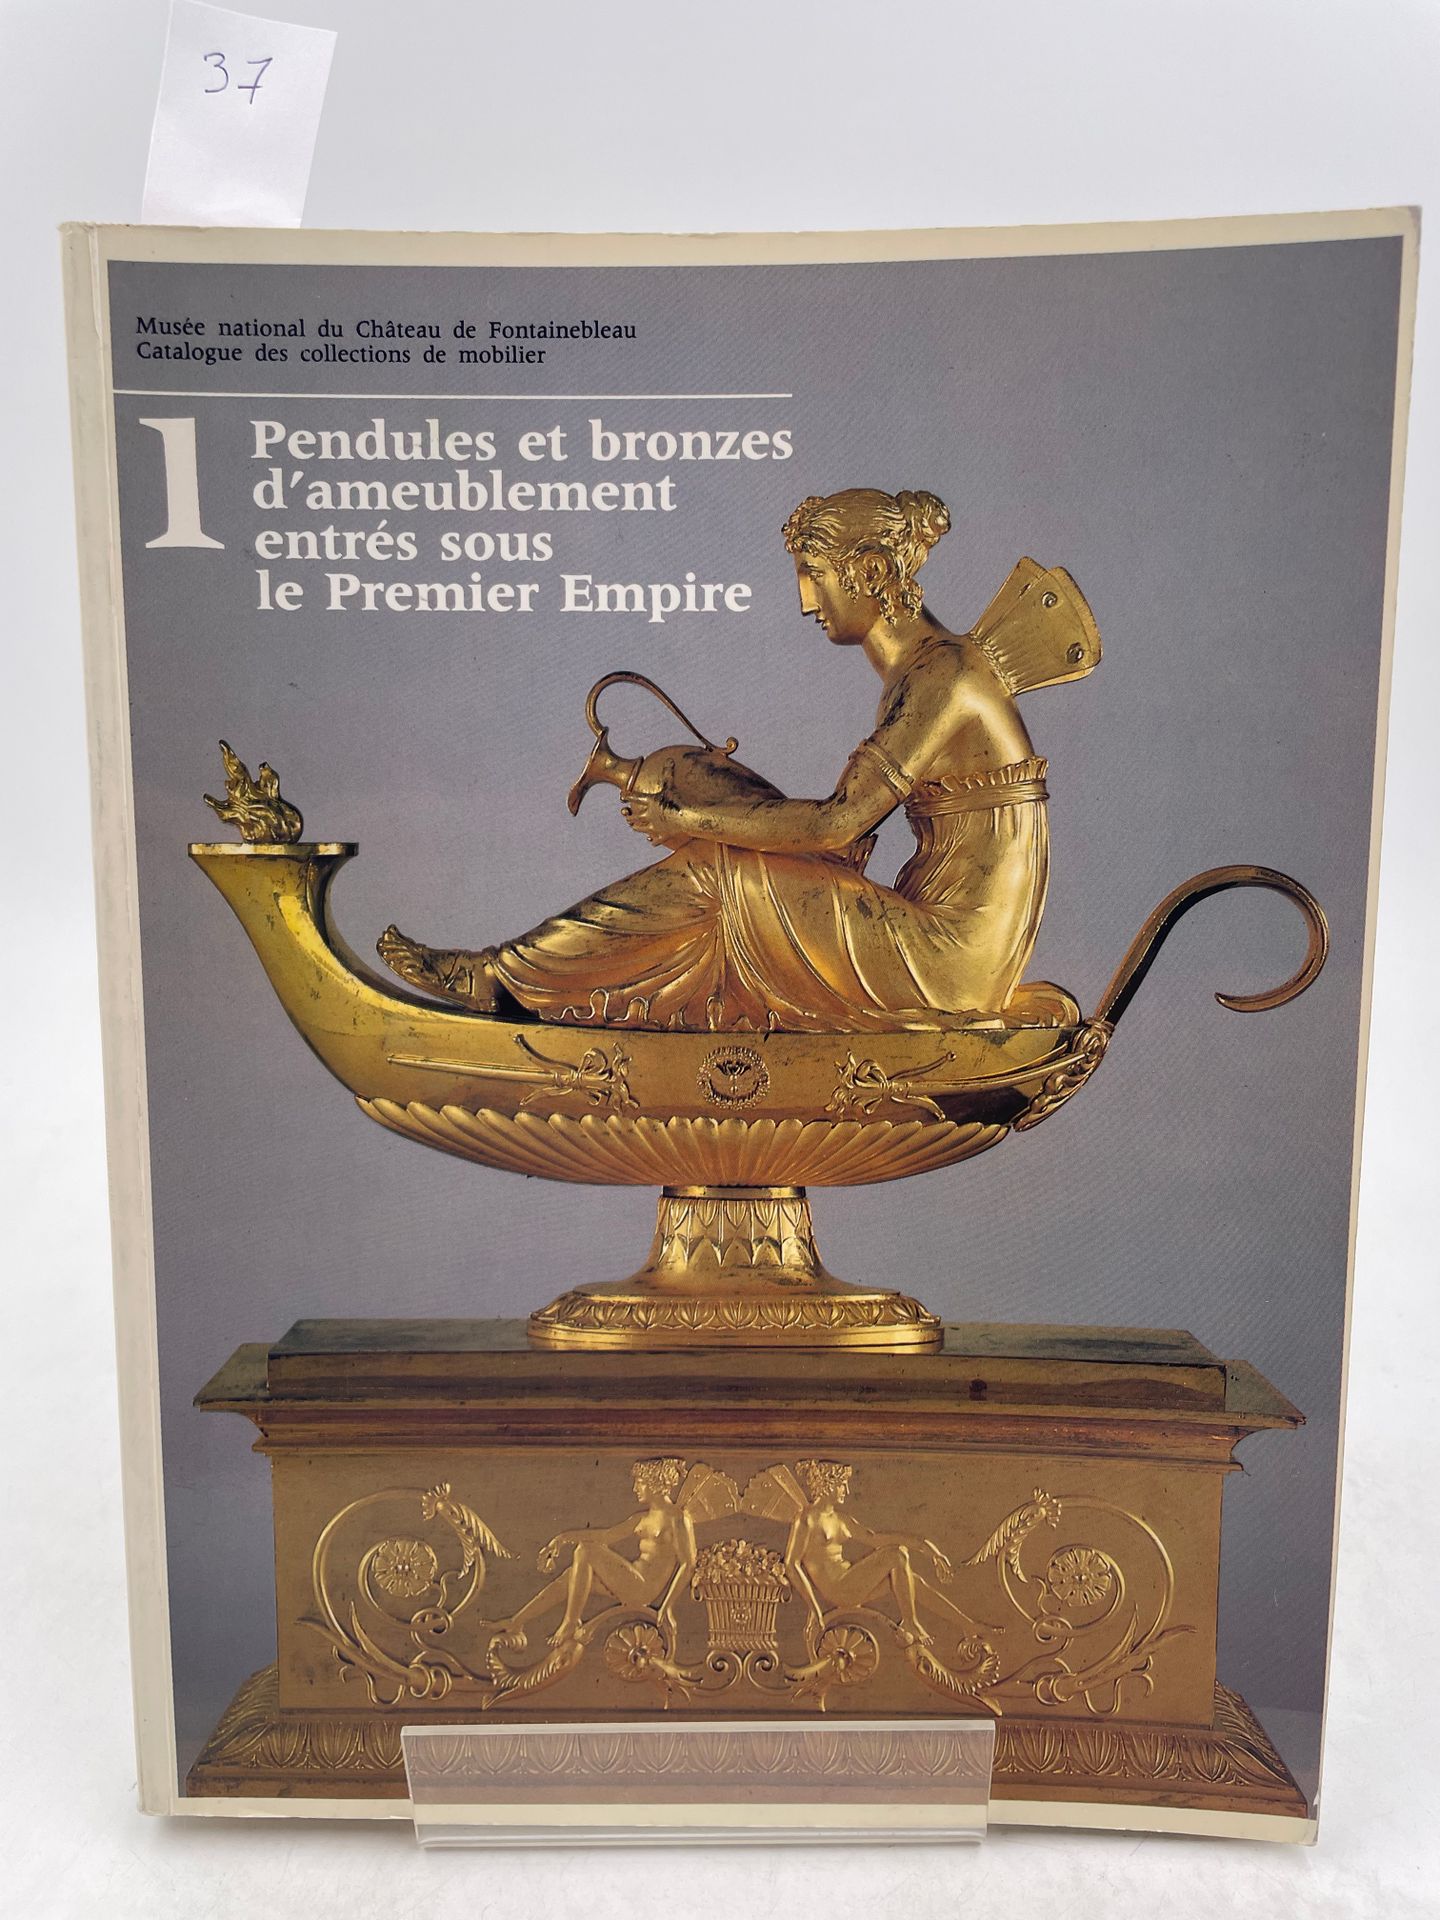 Null "第一帝国时期入藏的悬饰和青铜器"，Jean-Pierre Samoyault 编辑，国家博物馆联盟，1989 年